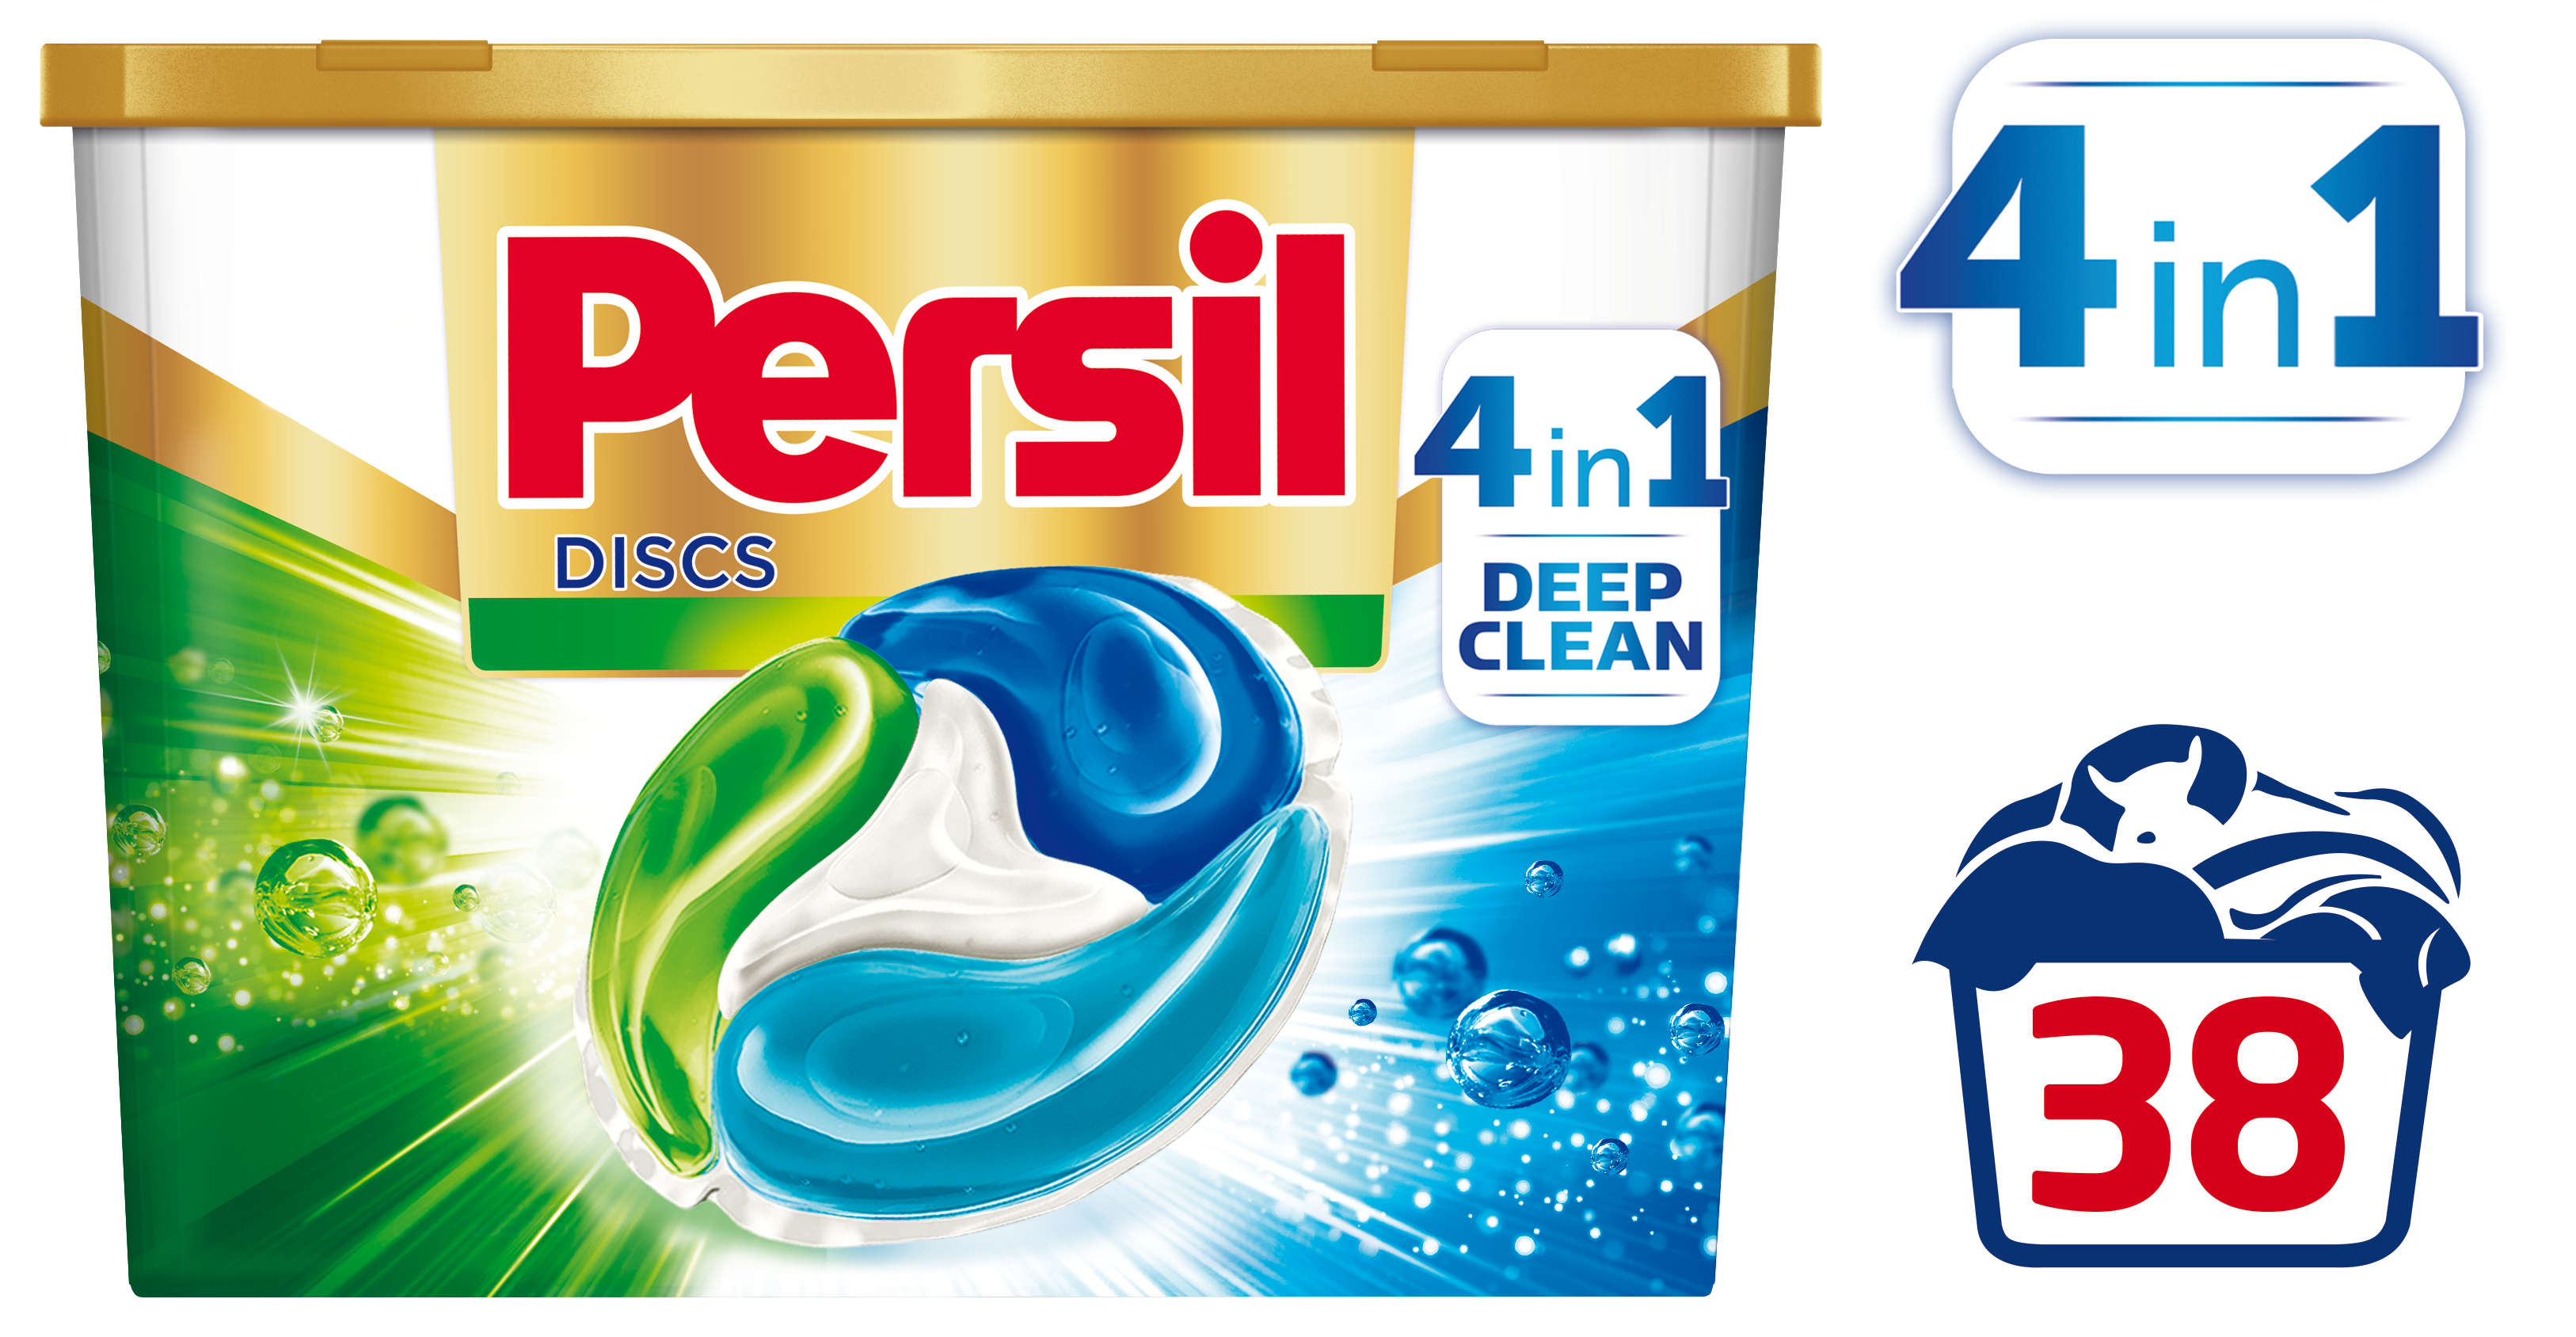 Гель для прання в капсулах Persil Discs Universal Deep Clean, 38 шт. (825759) - фото 2